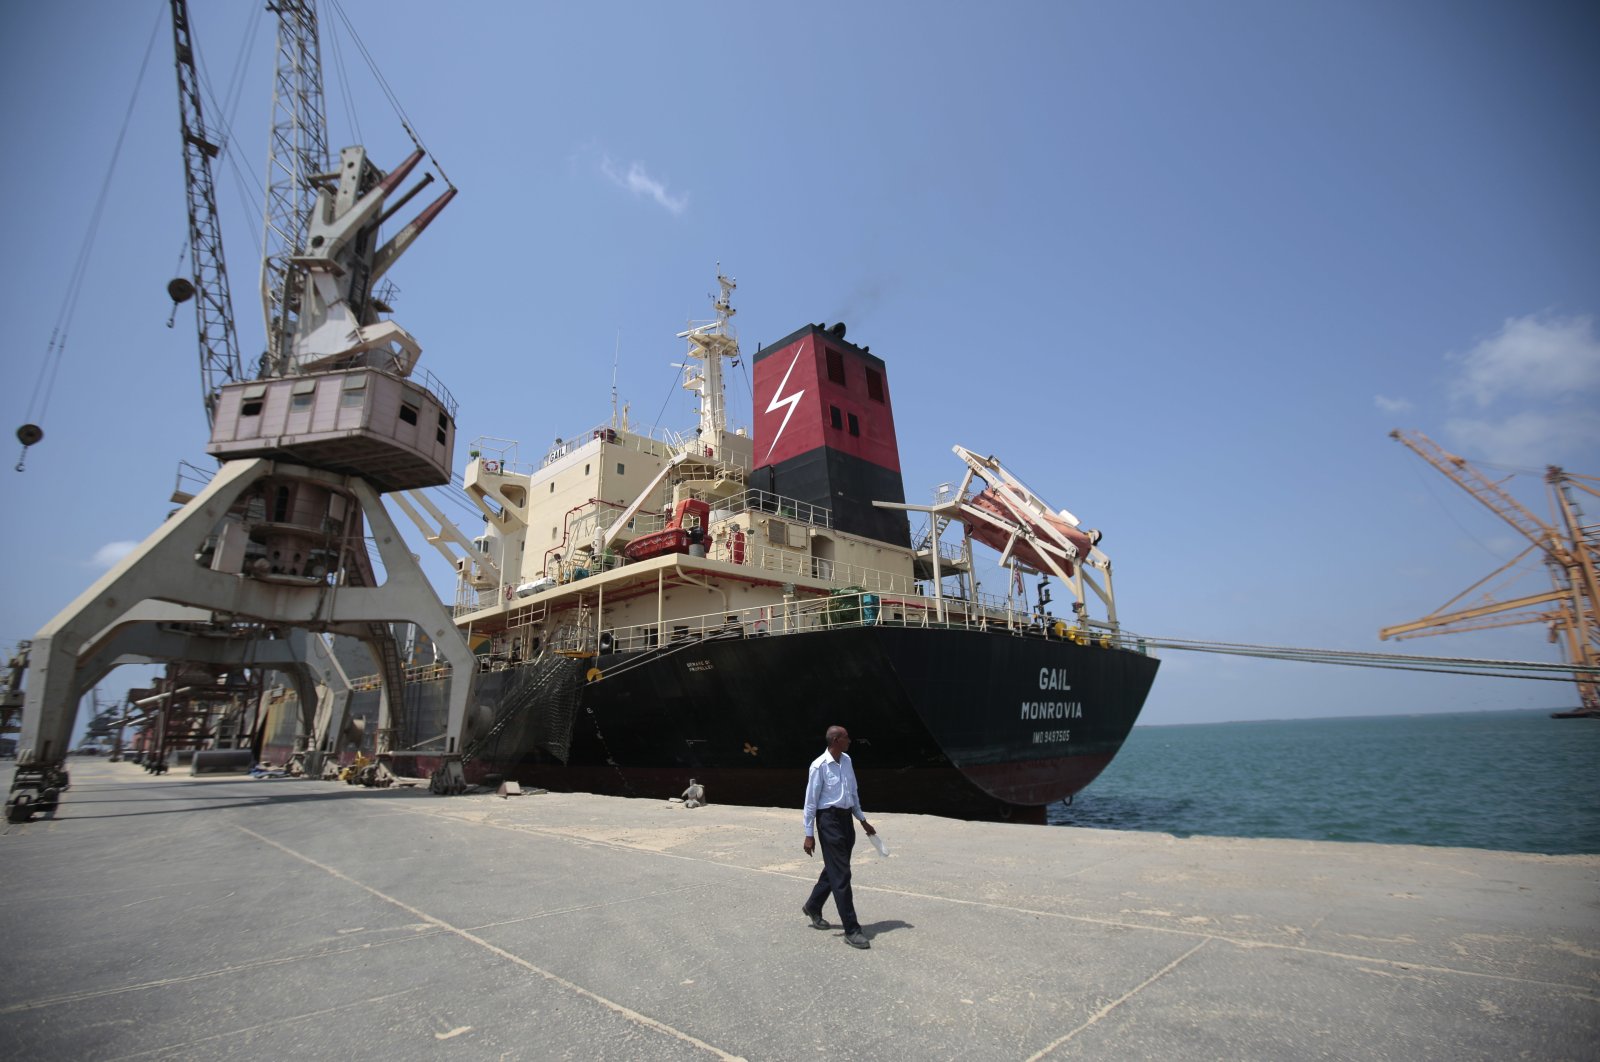 A cargo ship docks at the port in Hodeida, Yemen, Sept. 29, 2018. (AP Photo)